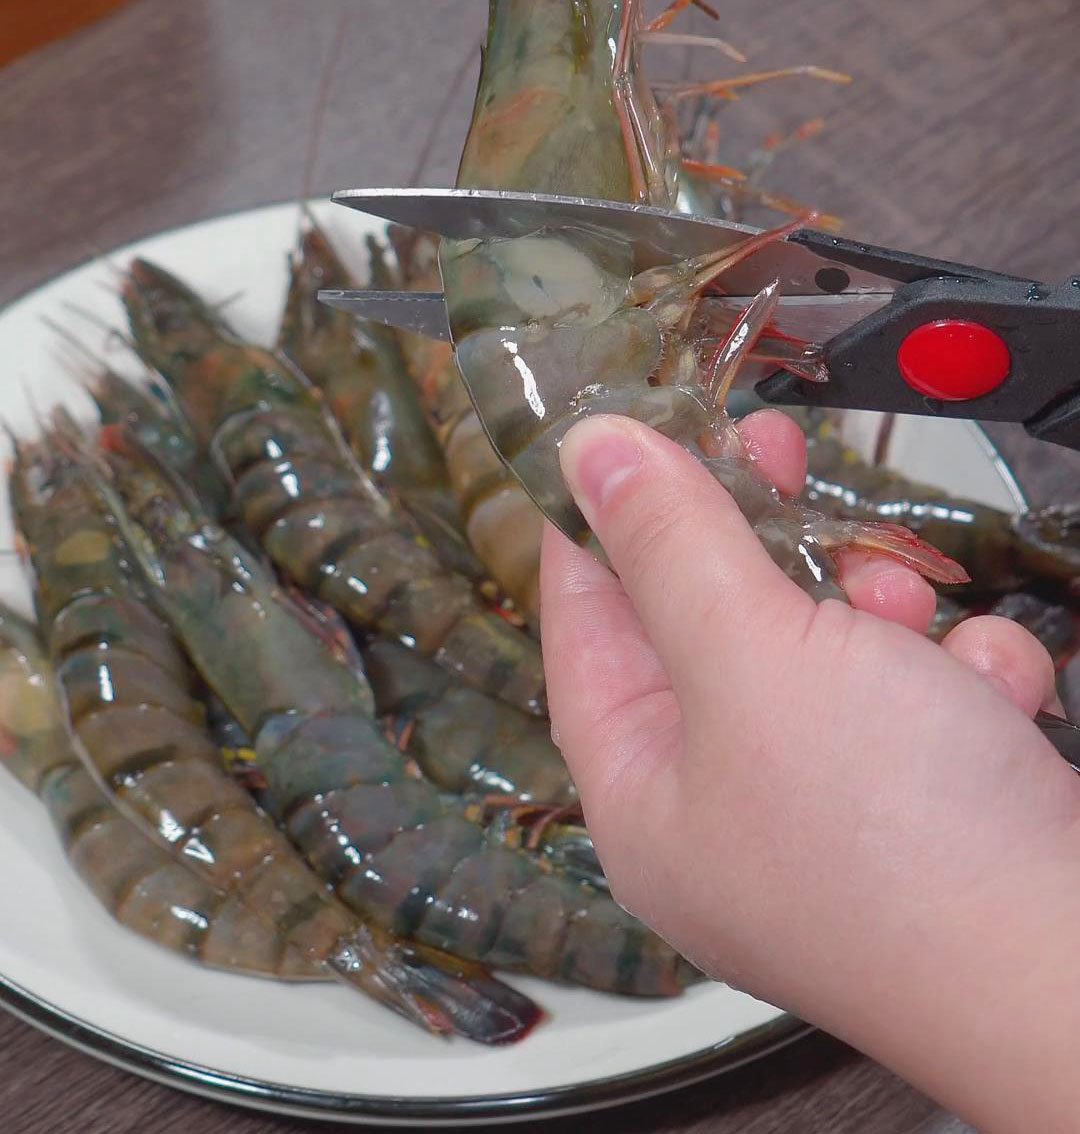 Cut off the shrimp heads